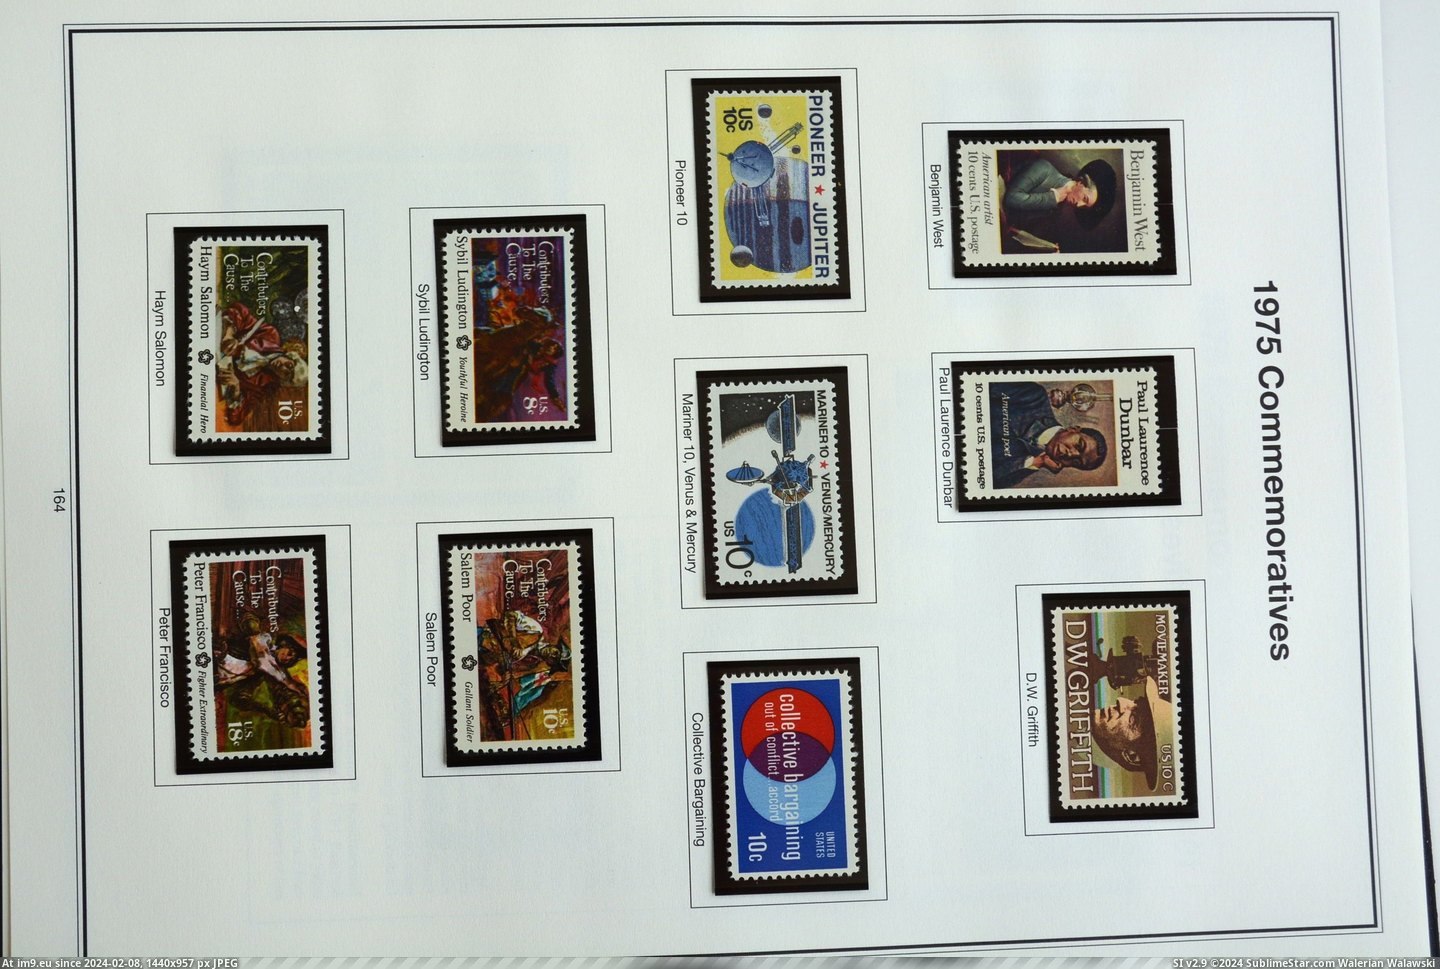  #Dsc  DSC_0877 Pic. (Image of album Stamp Covers))